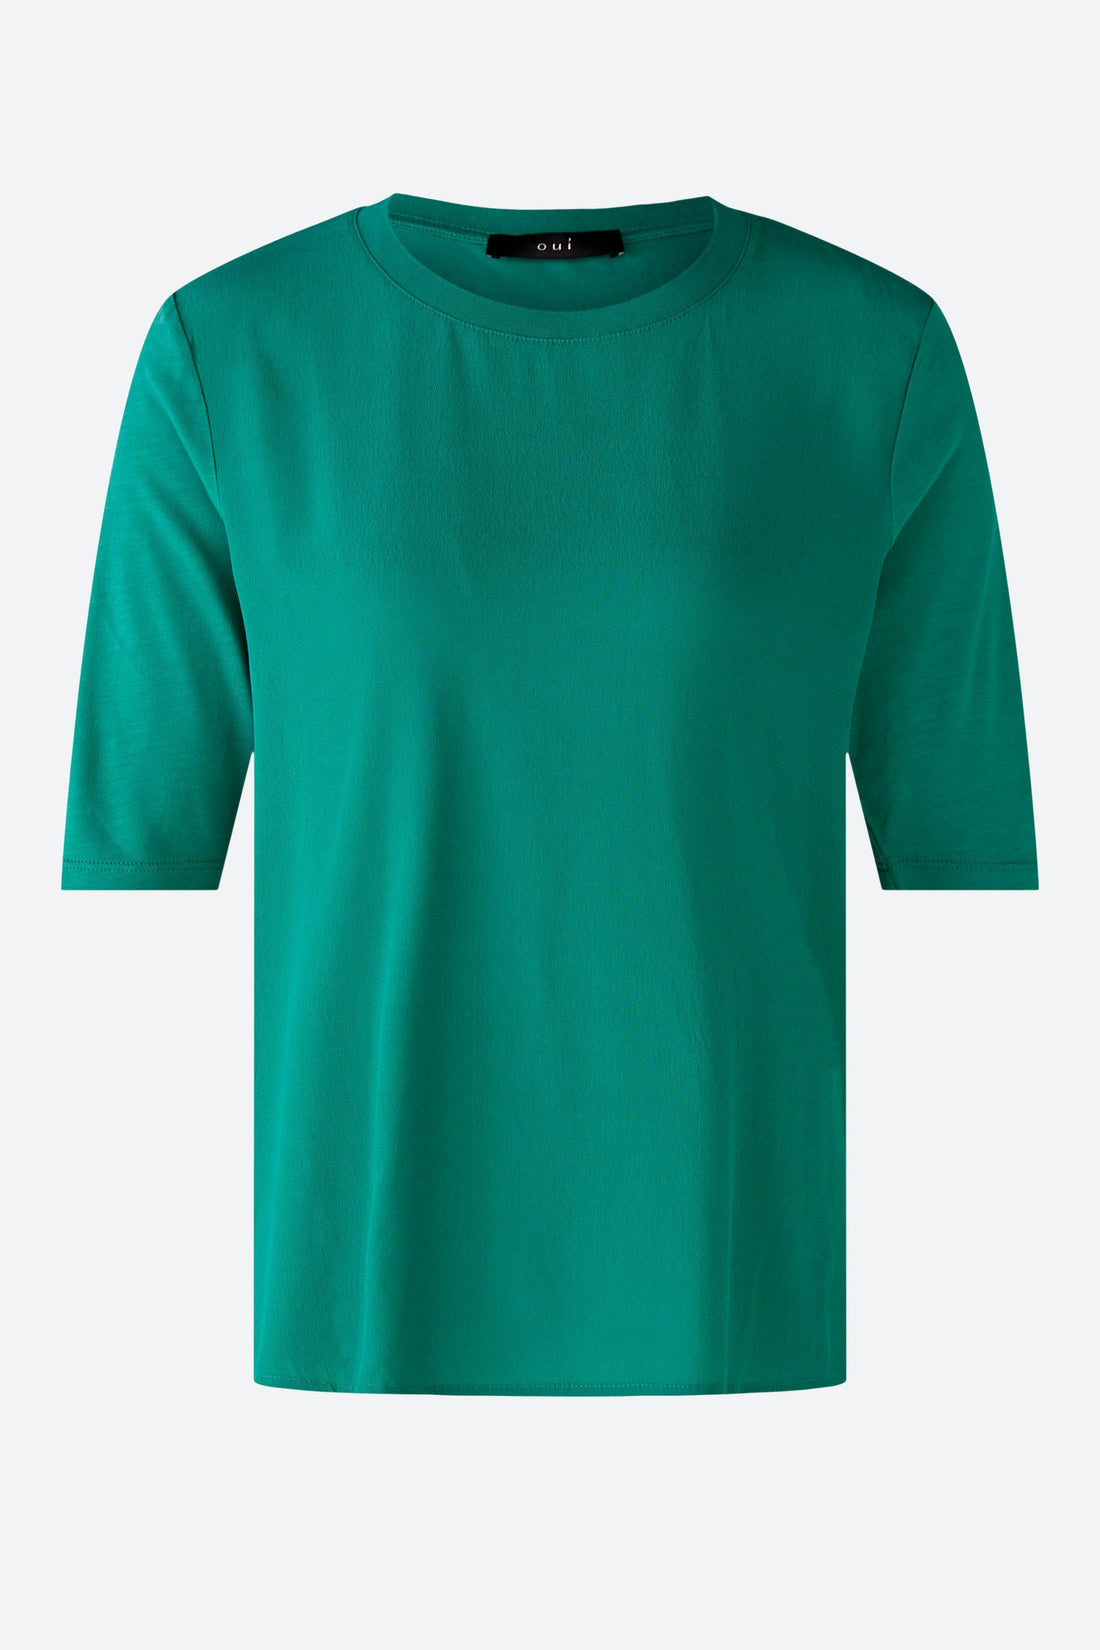 Green Blouse Shirt 100% Viscose